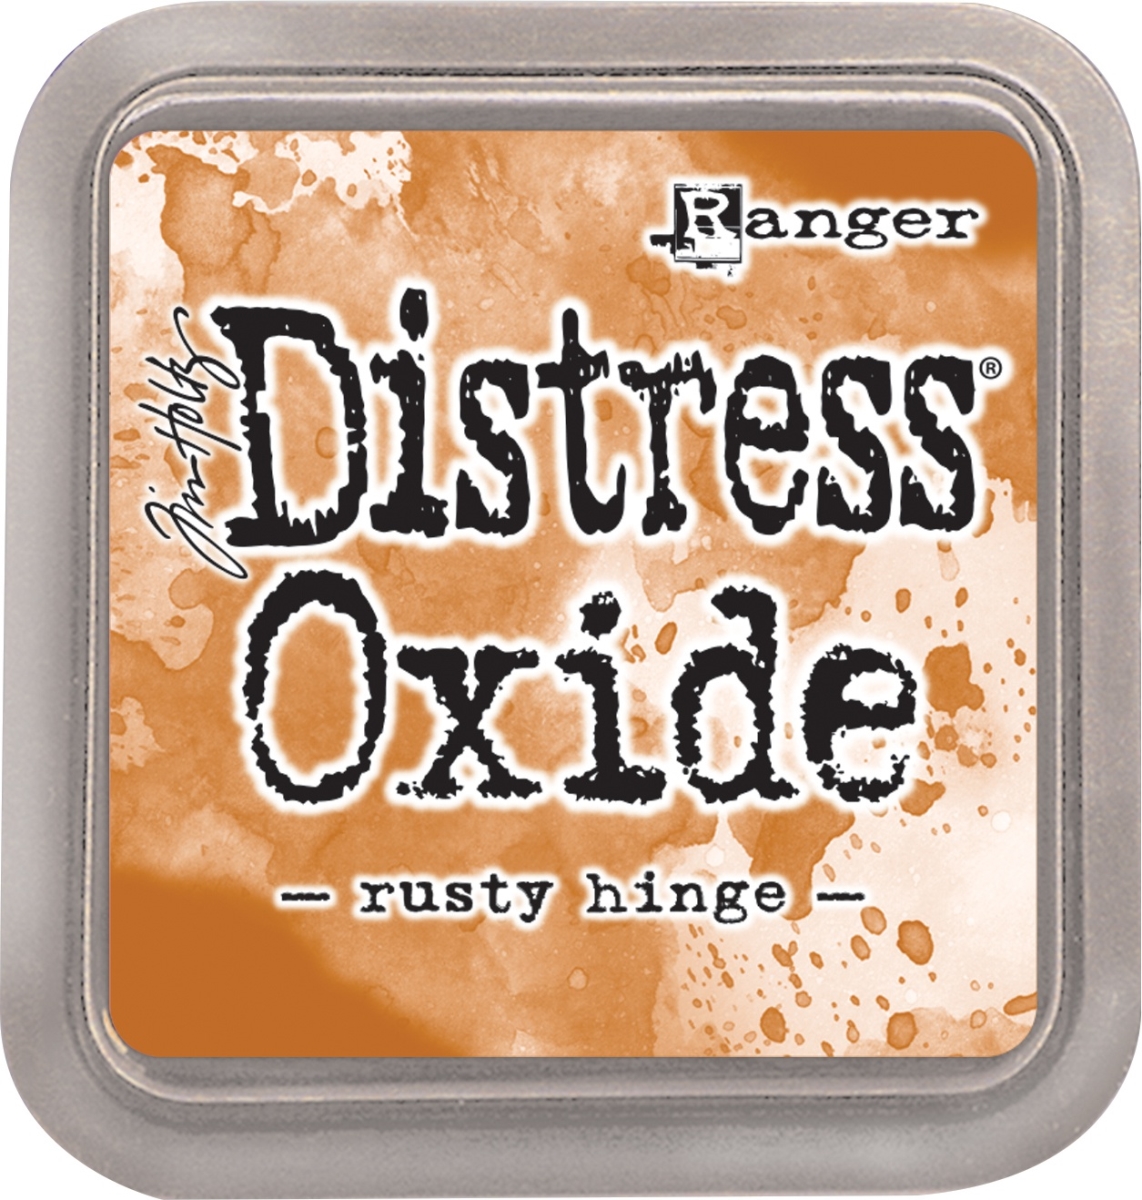 Tdo-56164 Tim Holtz Distress Oxides Ink Pad, Rusty Hinge